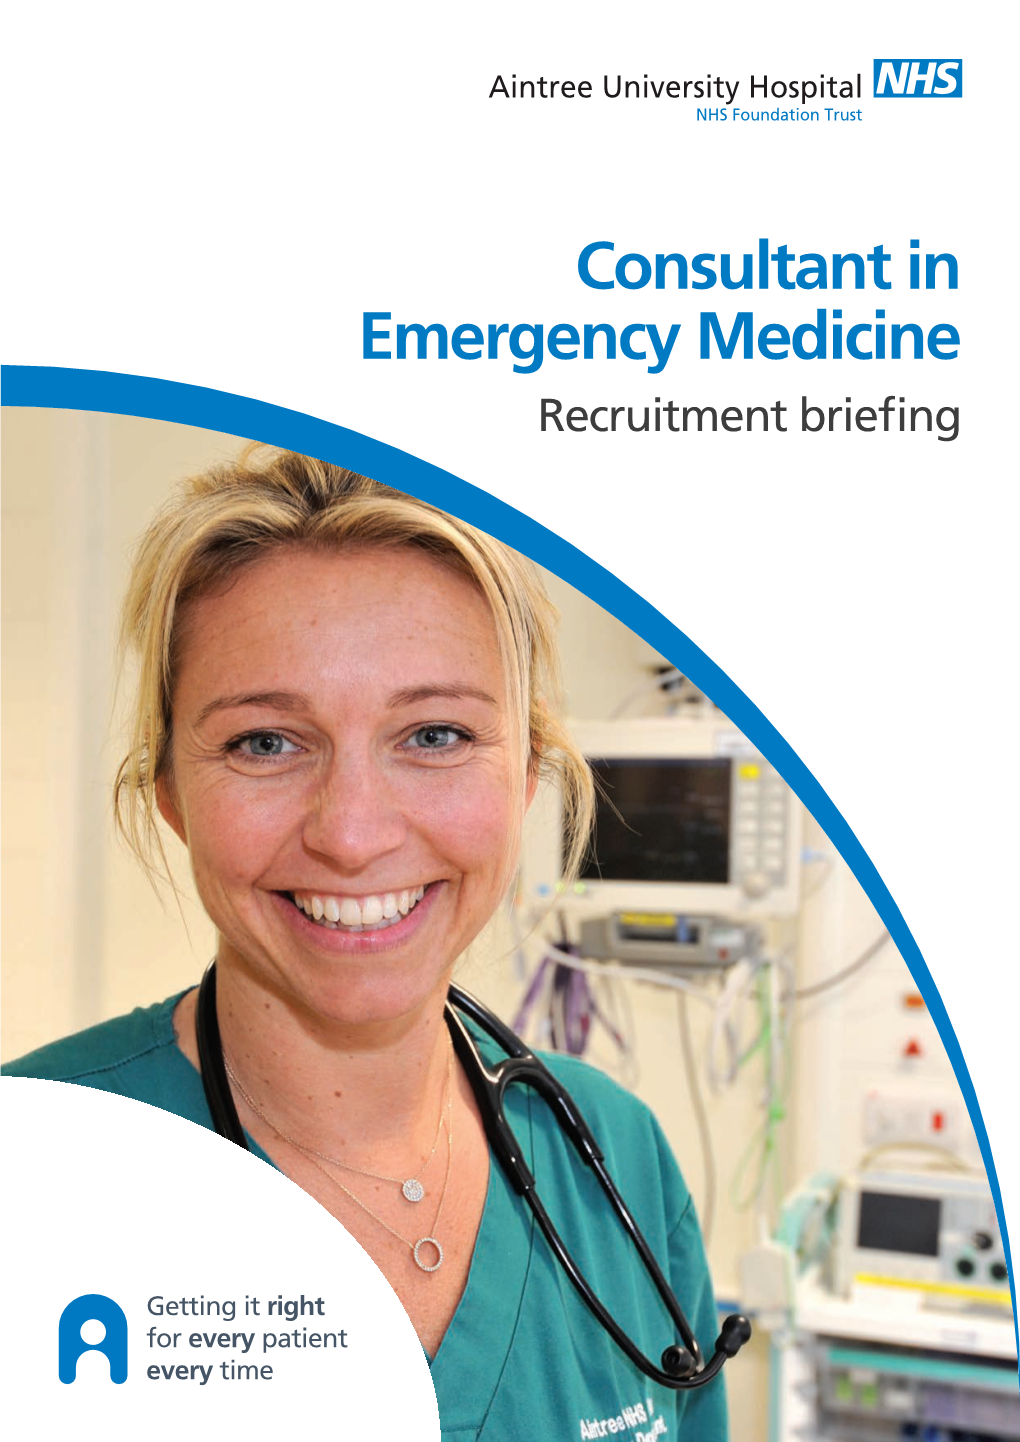 Consultant in Emergency Medicine Recruitment Briefing 2 / Consultant in Emergency Medicine